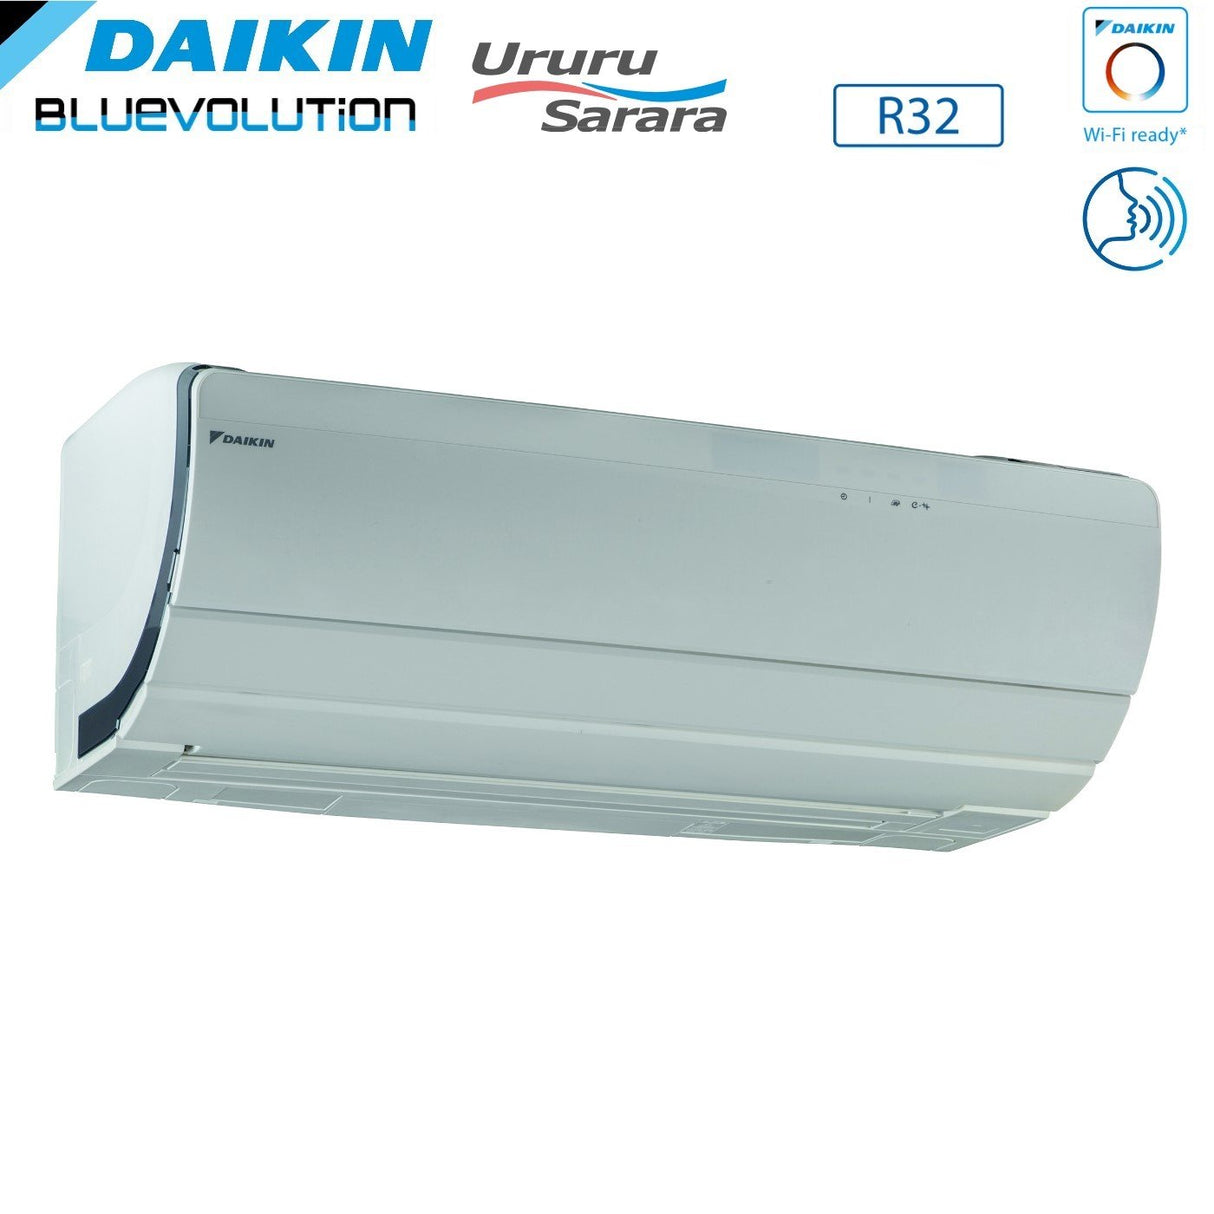 immagine-3-daikin-climatizzatore-condizionatore-daikin-bluevolution-inverter-serie-ururu-sarara-12000-btu-ftxz35n-r-32-wi-fi-optional-classe-a-garanzia-italiana-ean-8059657000804